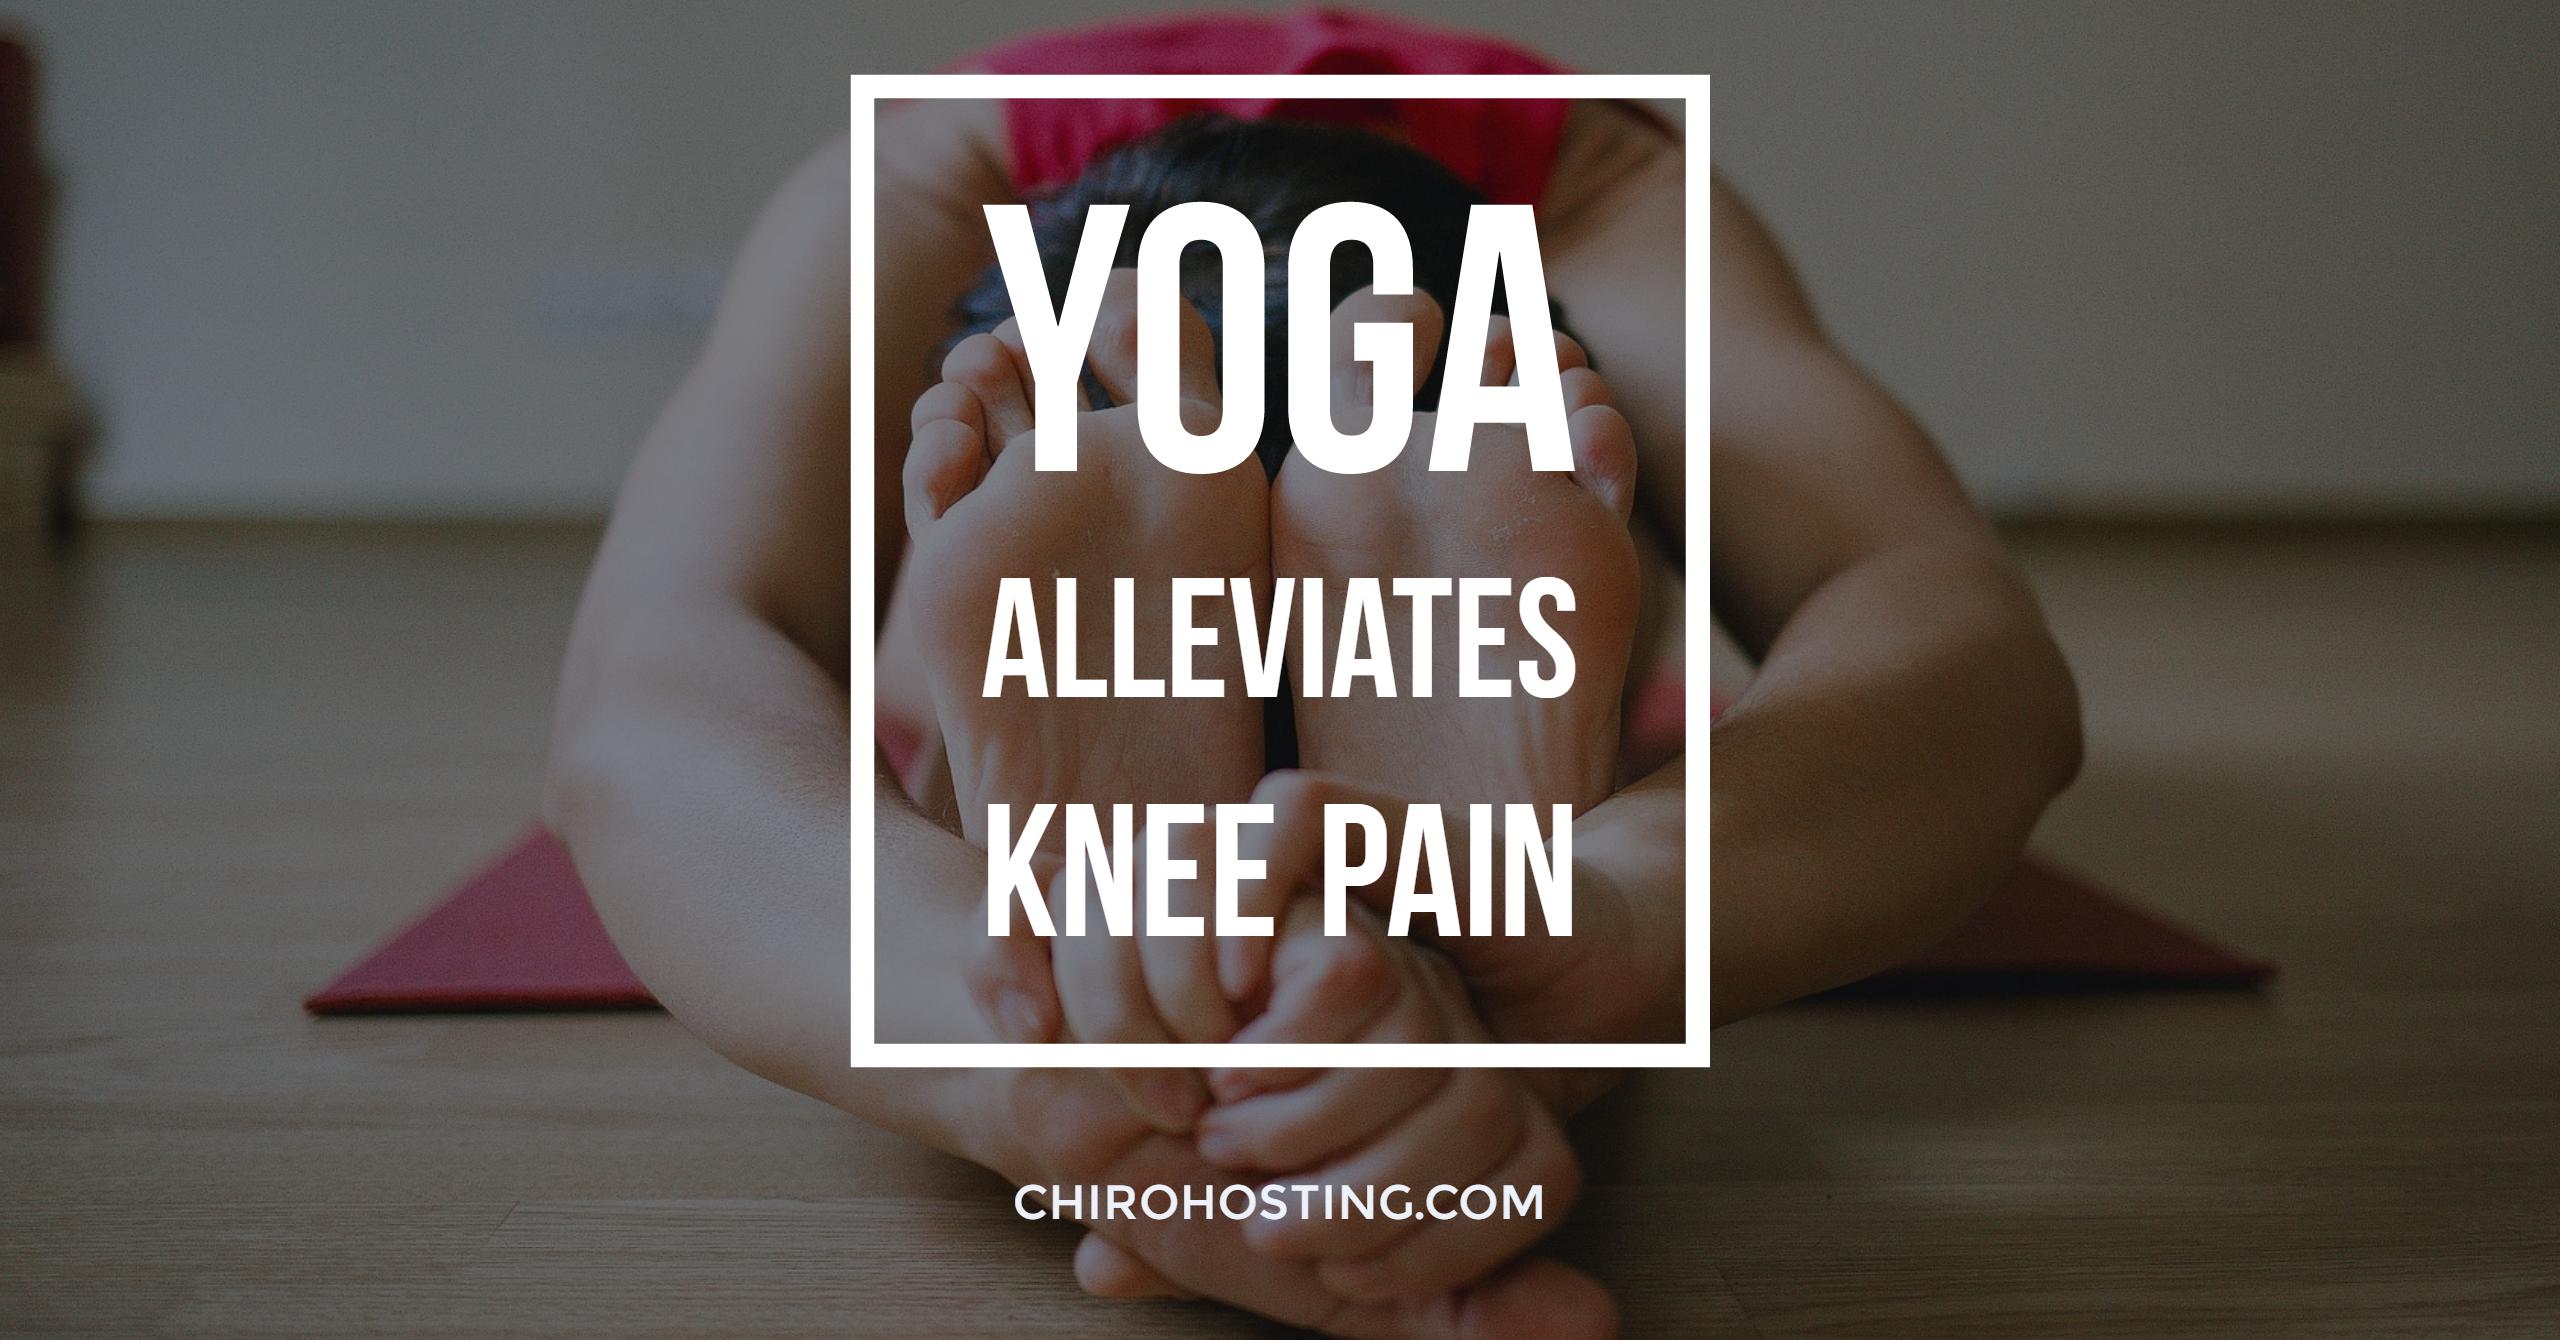 Yoga Alleviates Knee Pain